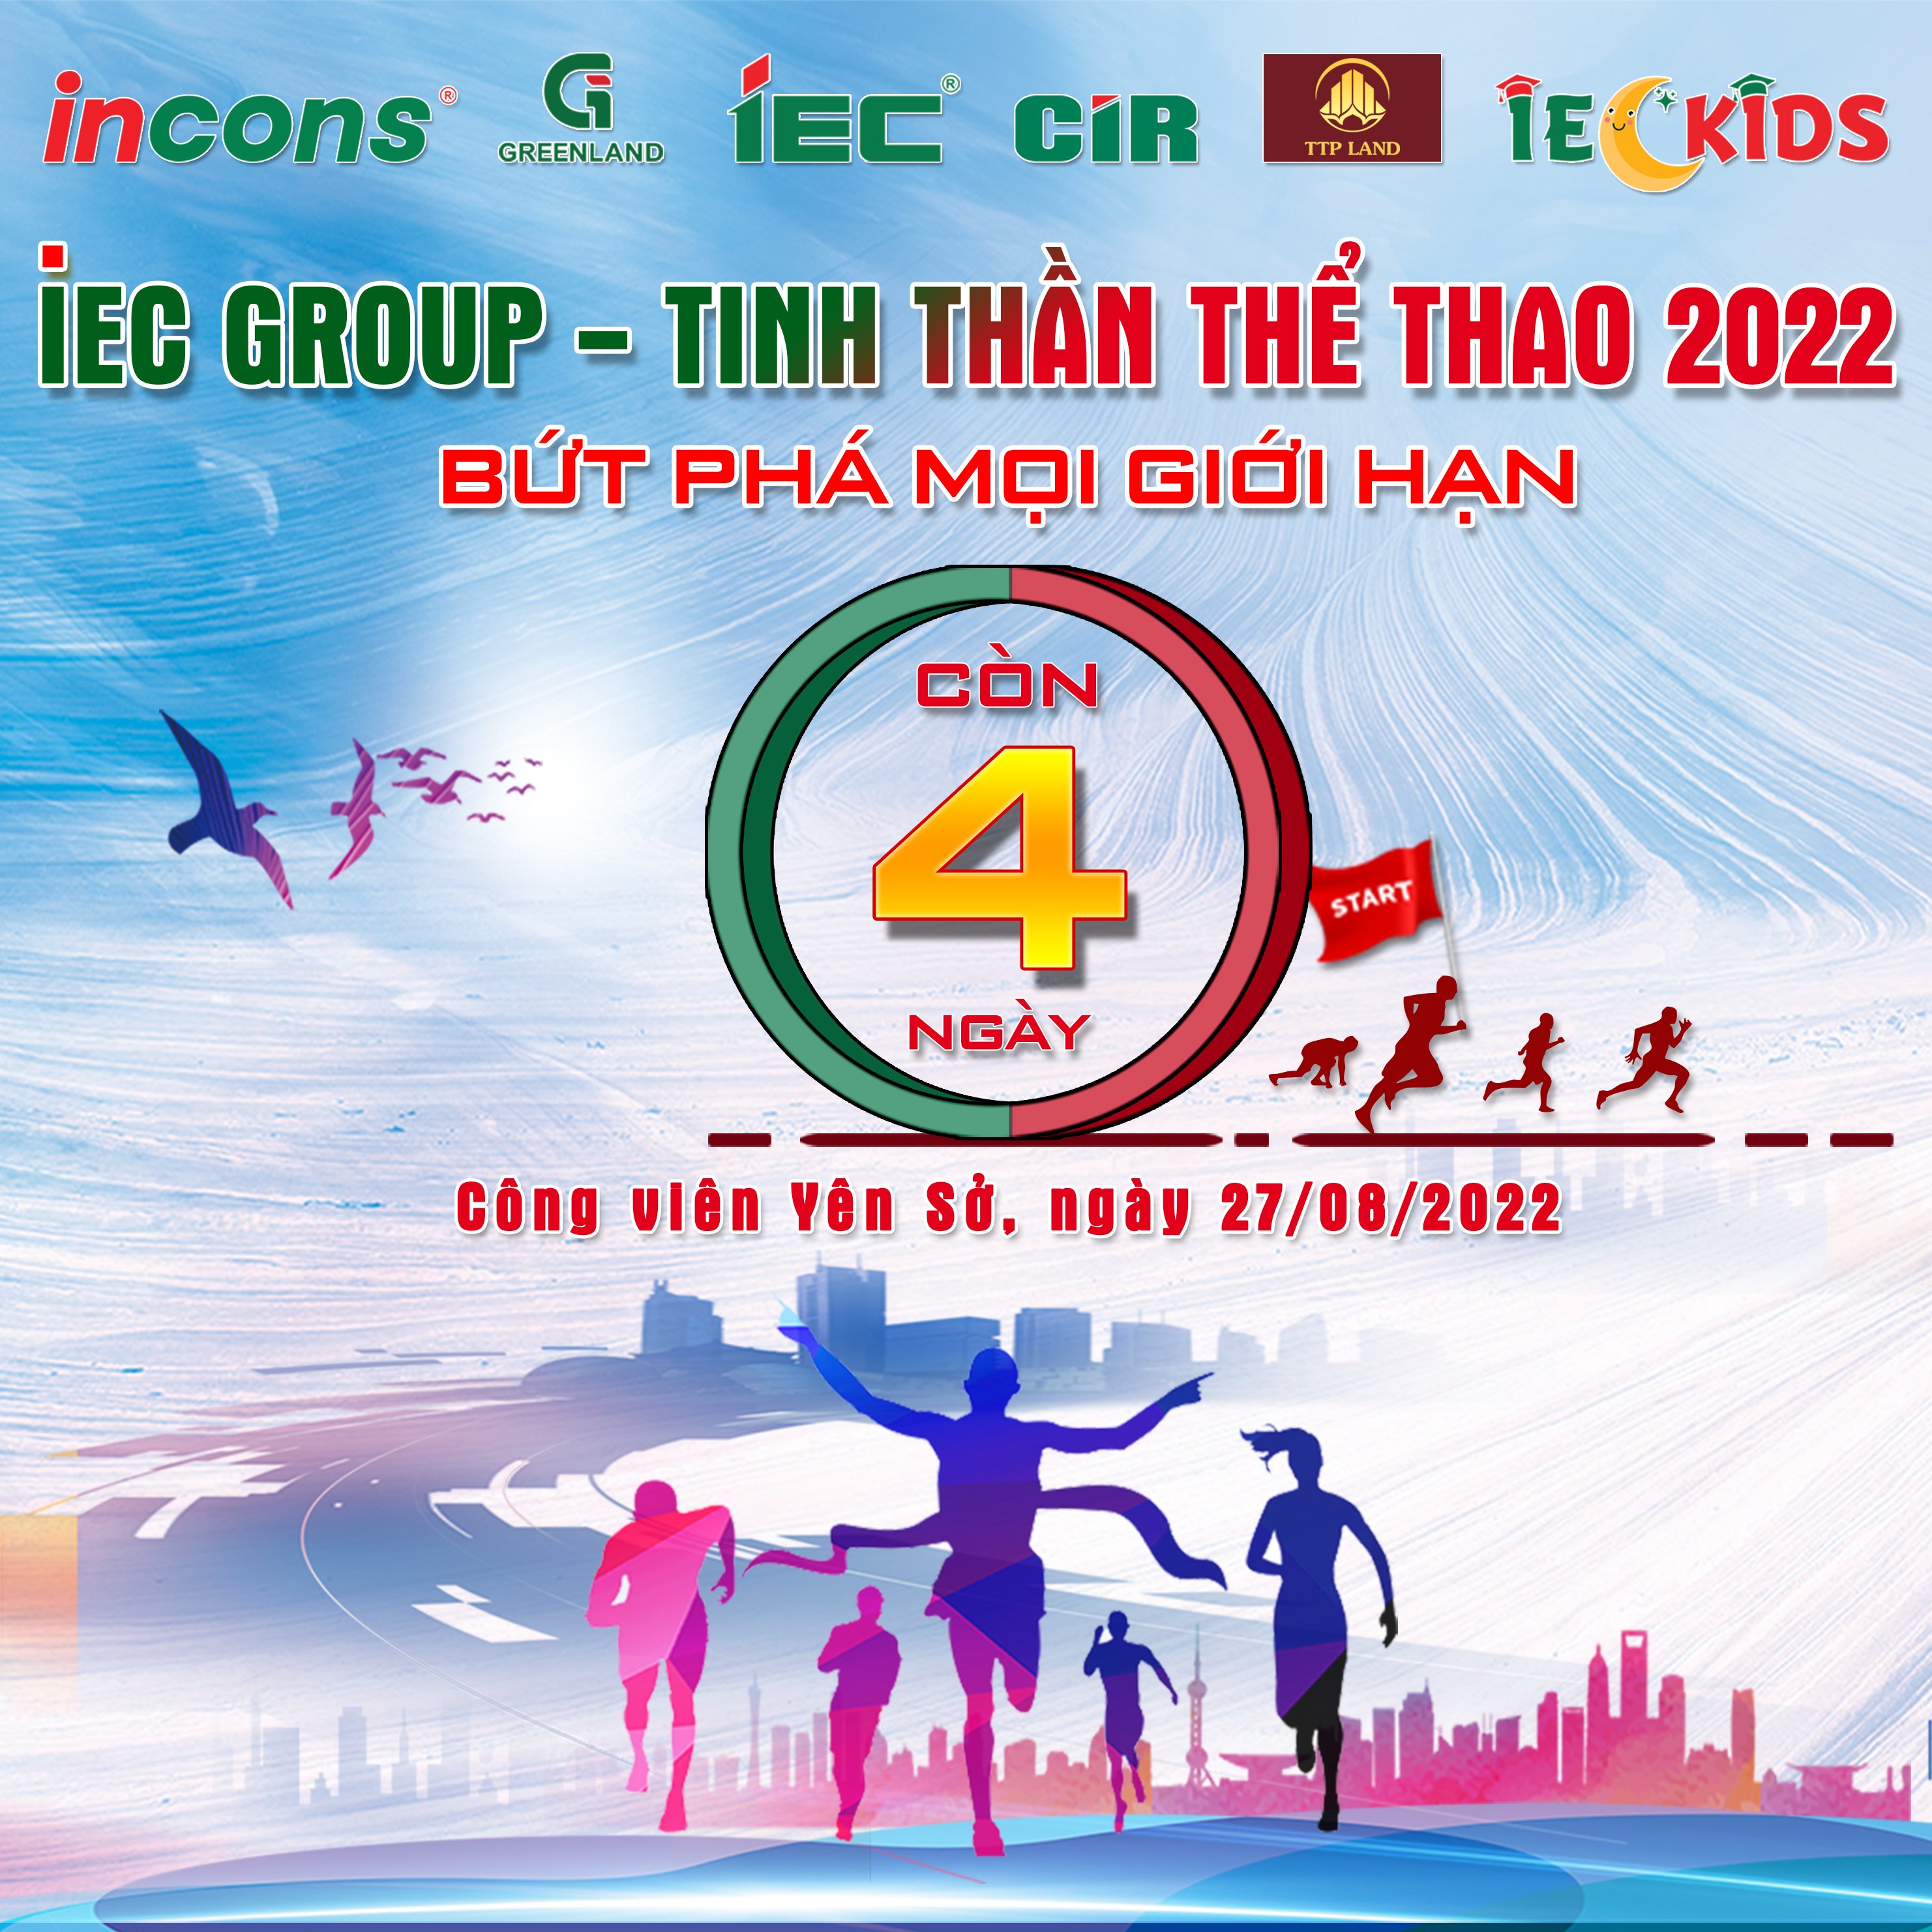 IEC GROUP - TINH THẦN THỂ THAO 2022